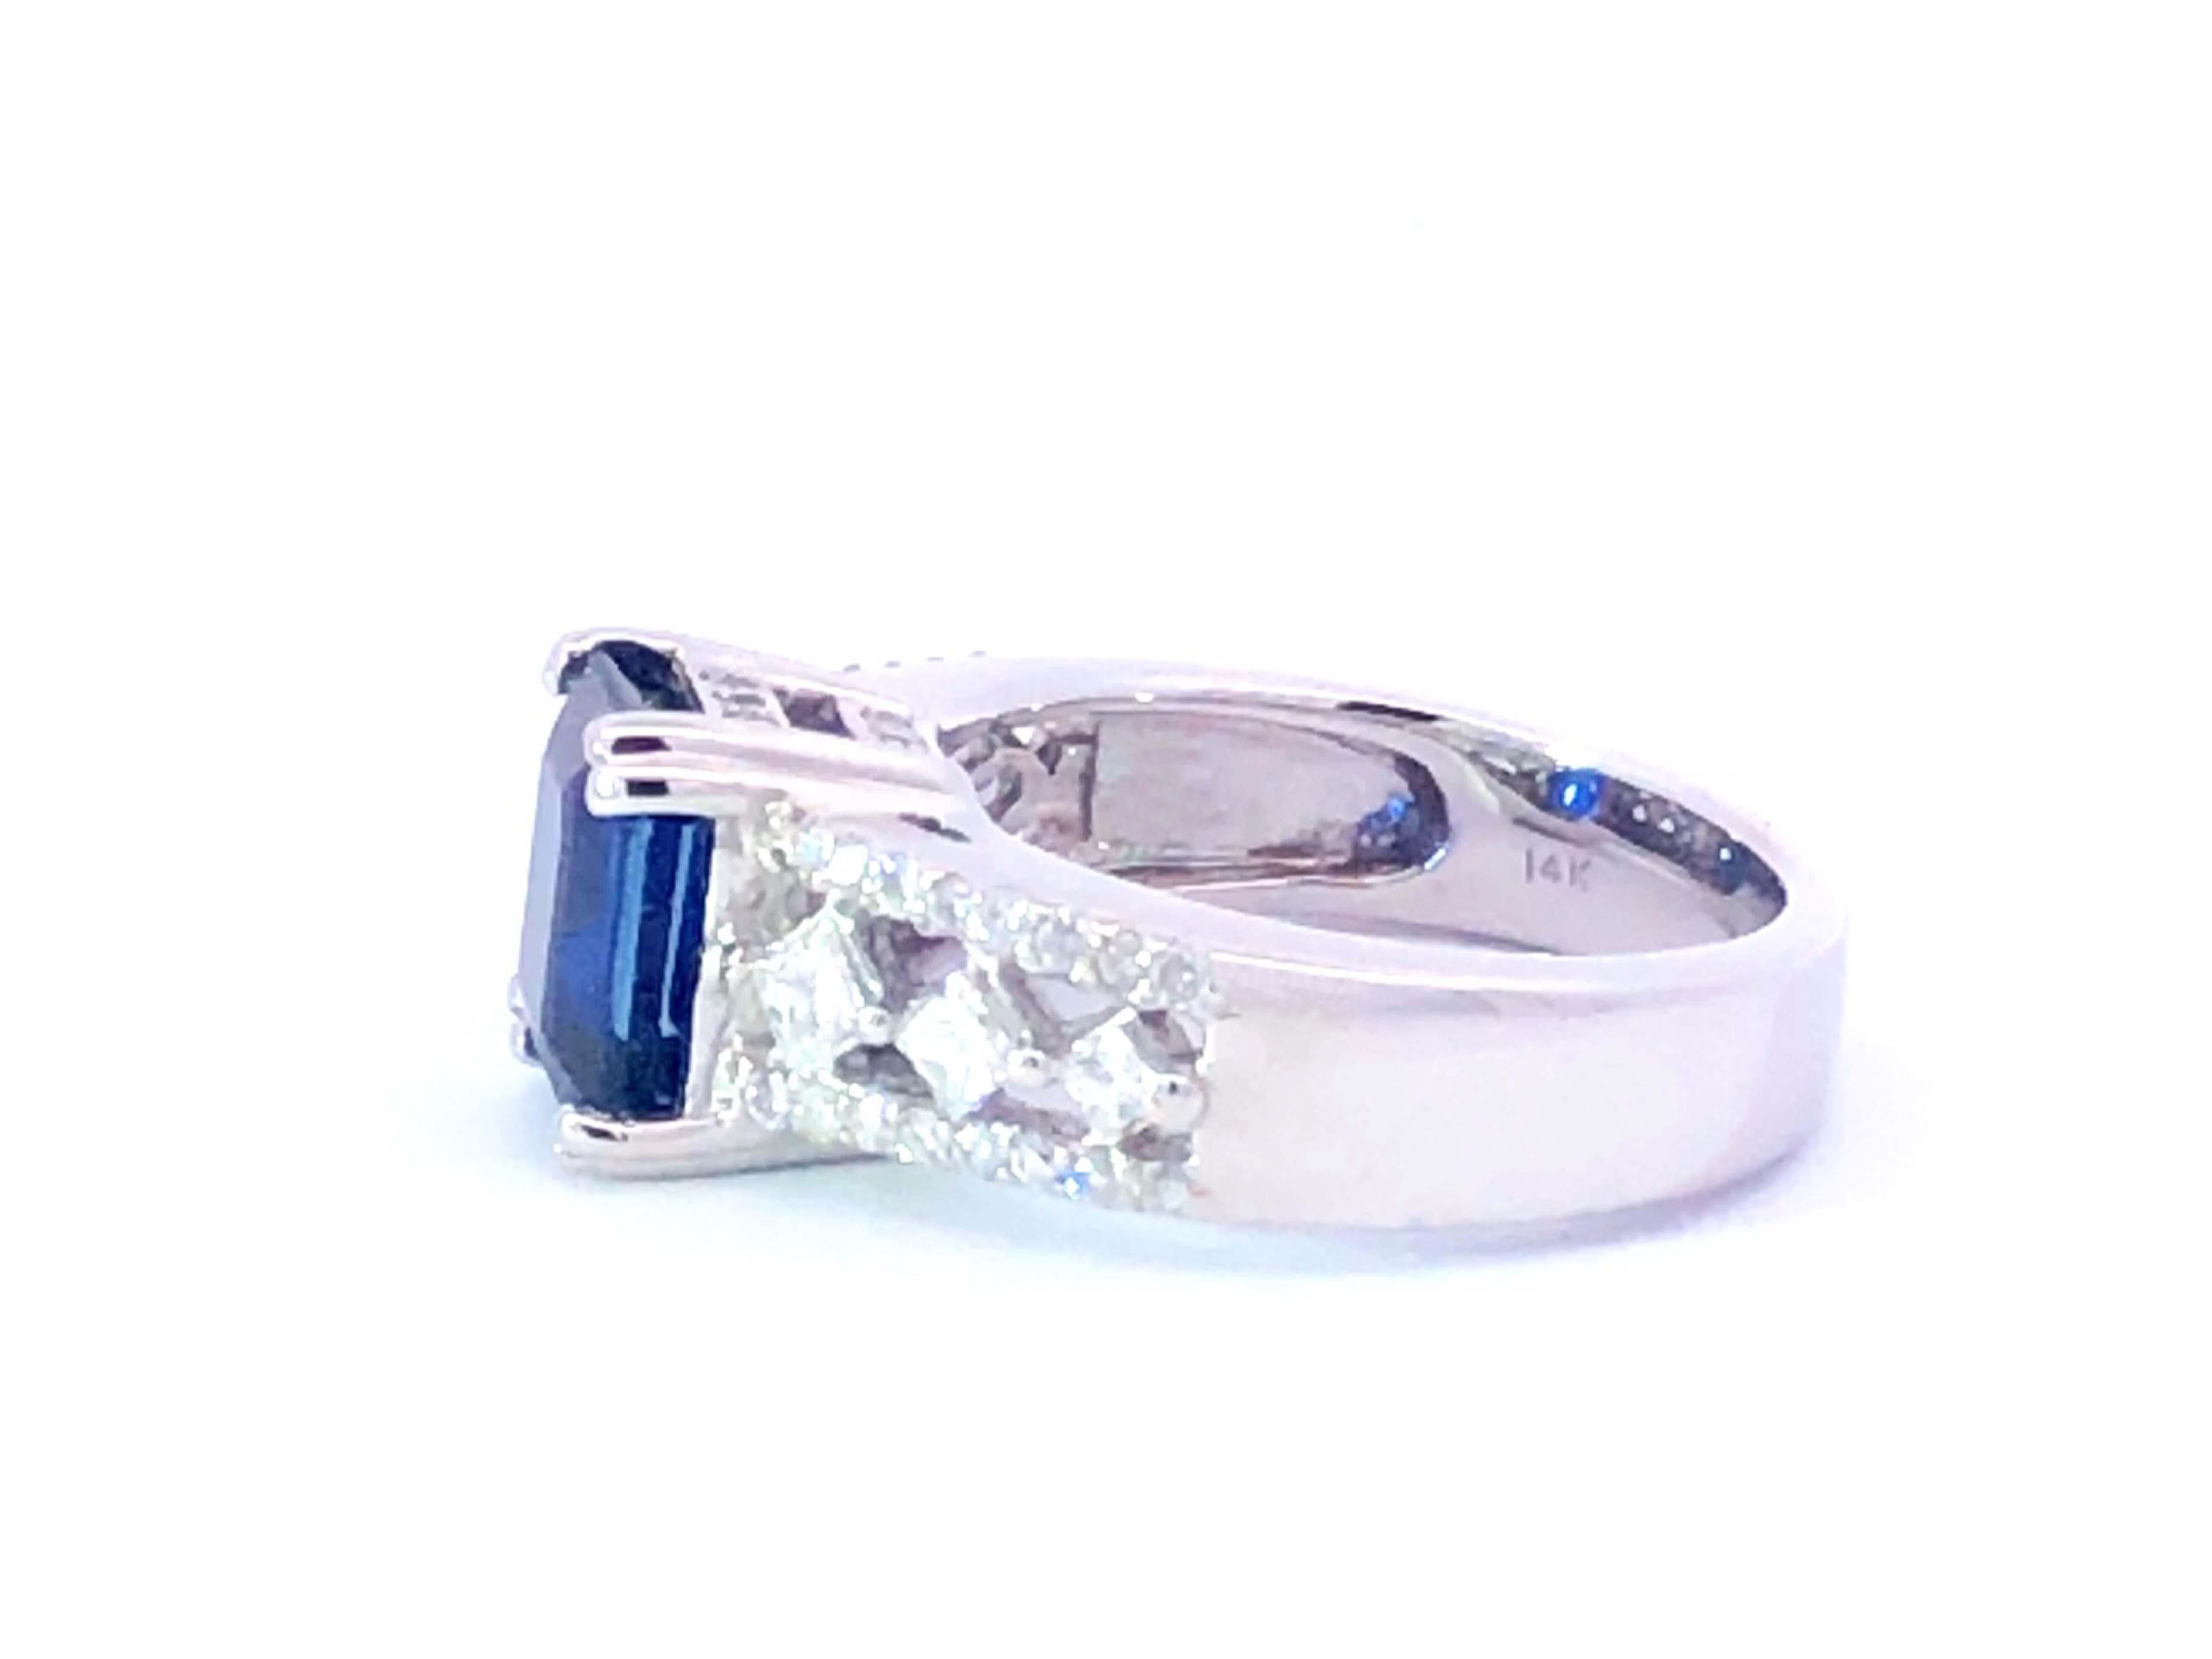 Women's GIA Blue Sapphire Diamond Ring in 14k White Gold